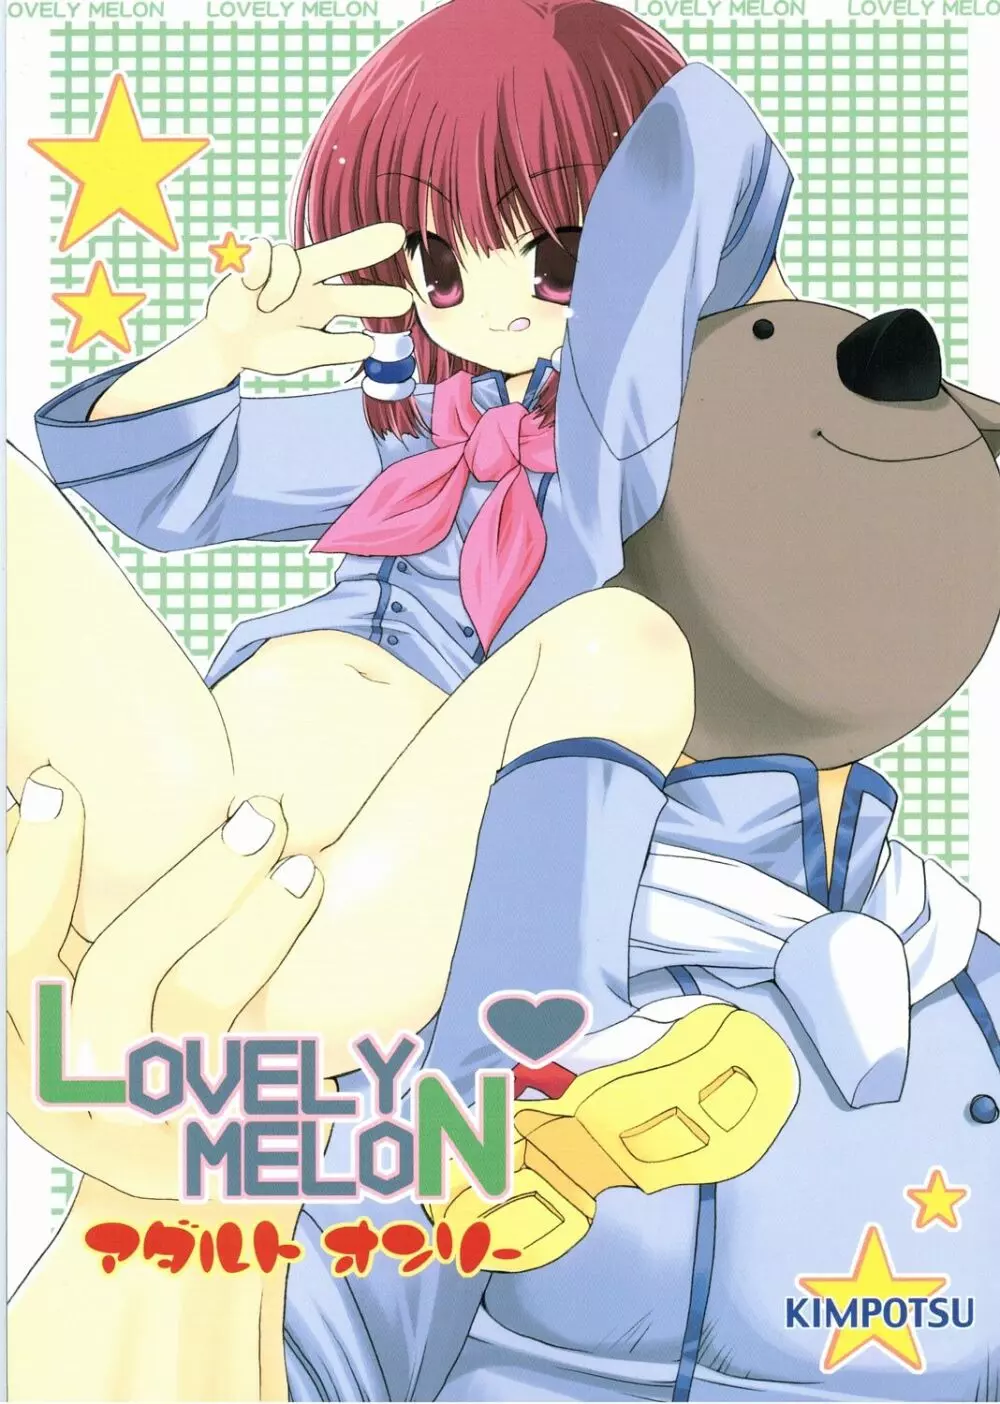 LOVELY MELON - page1